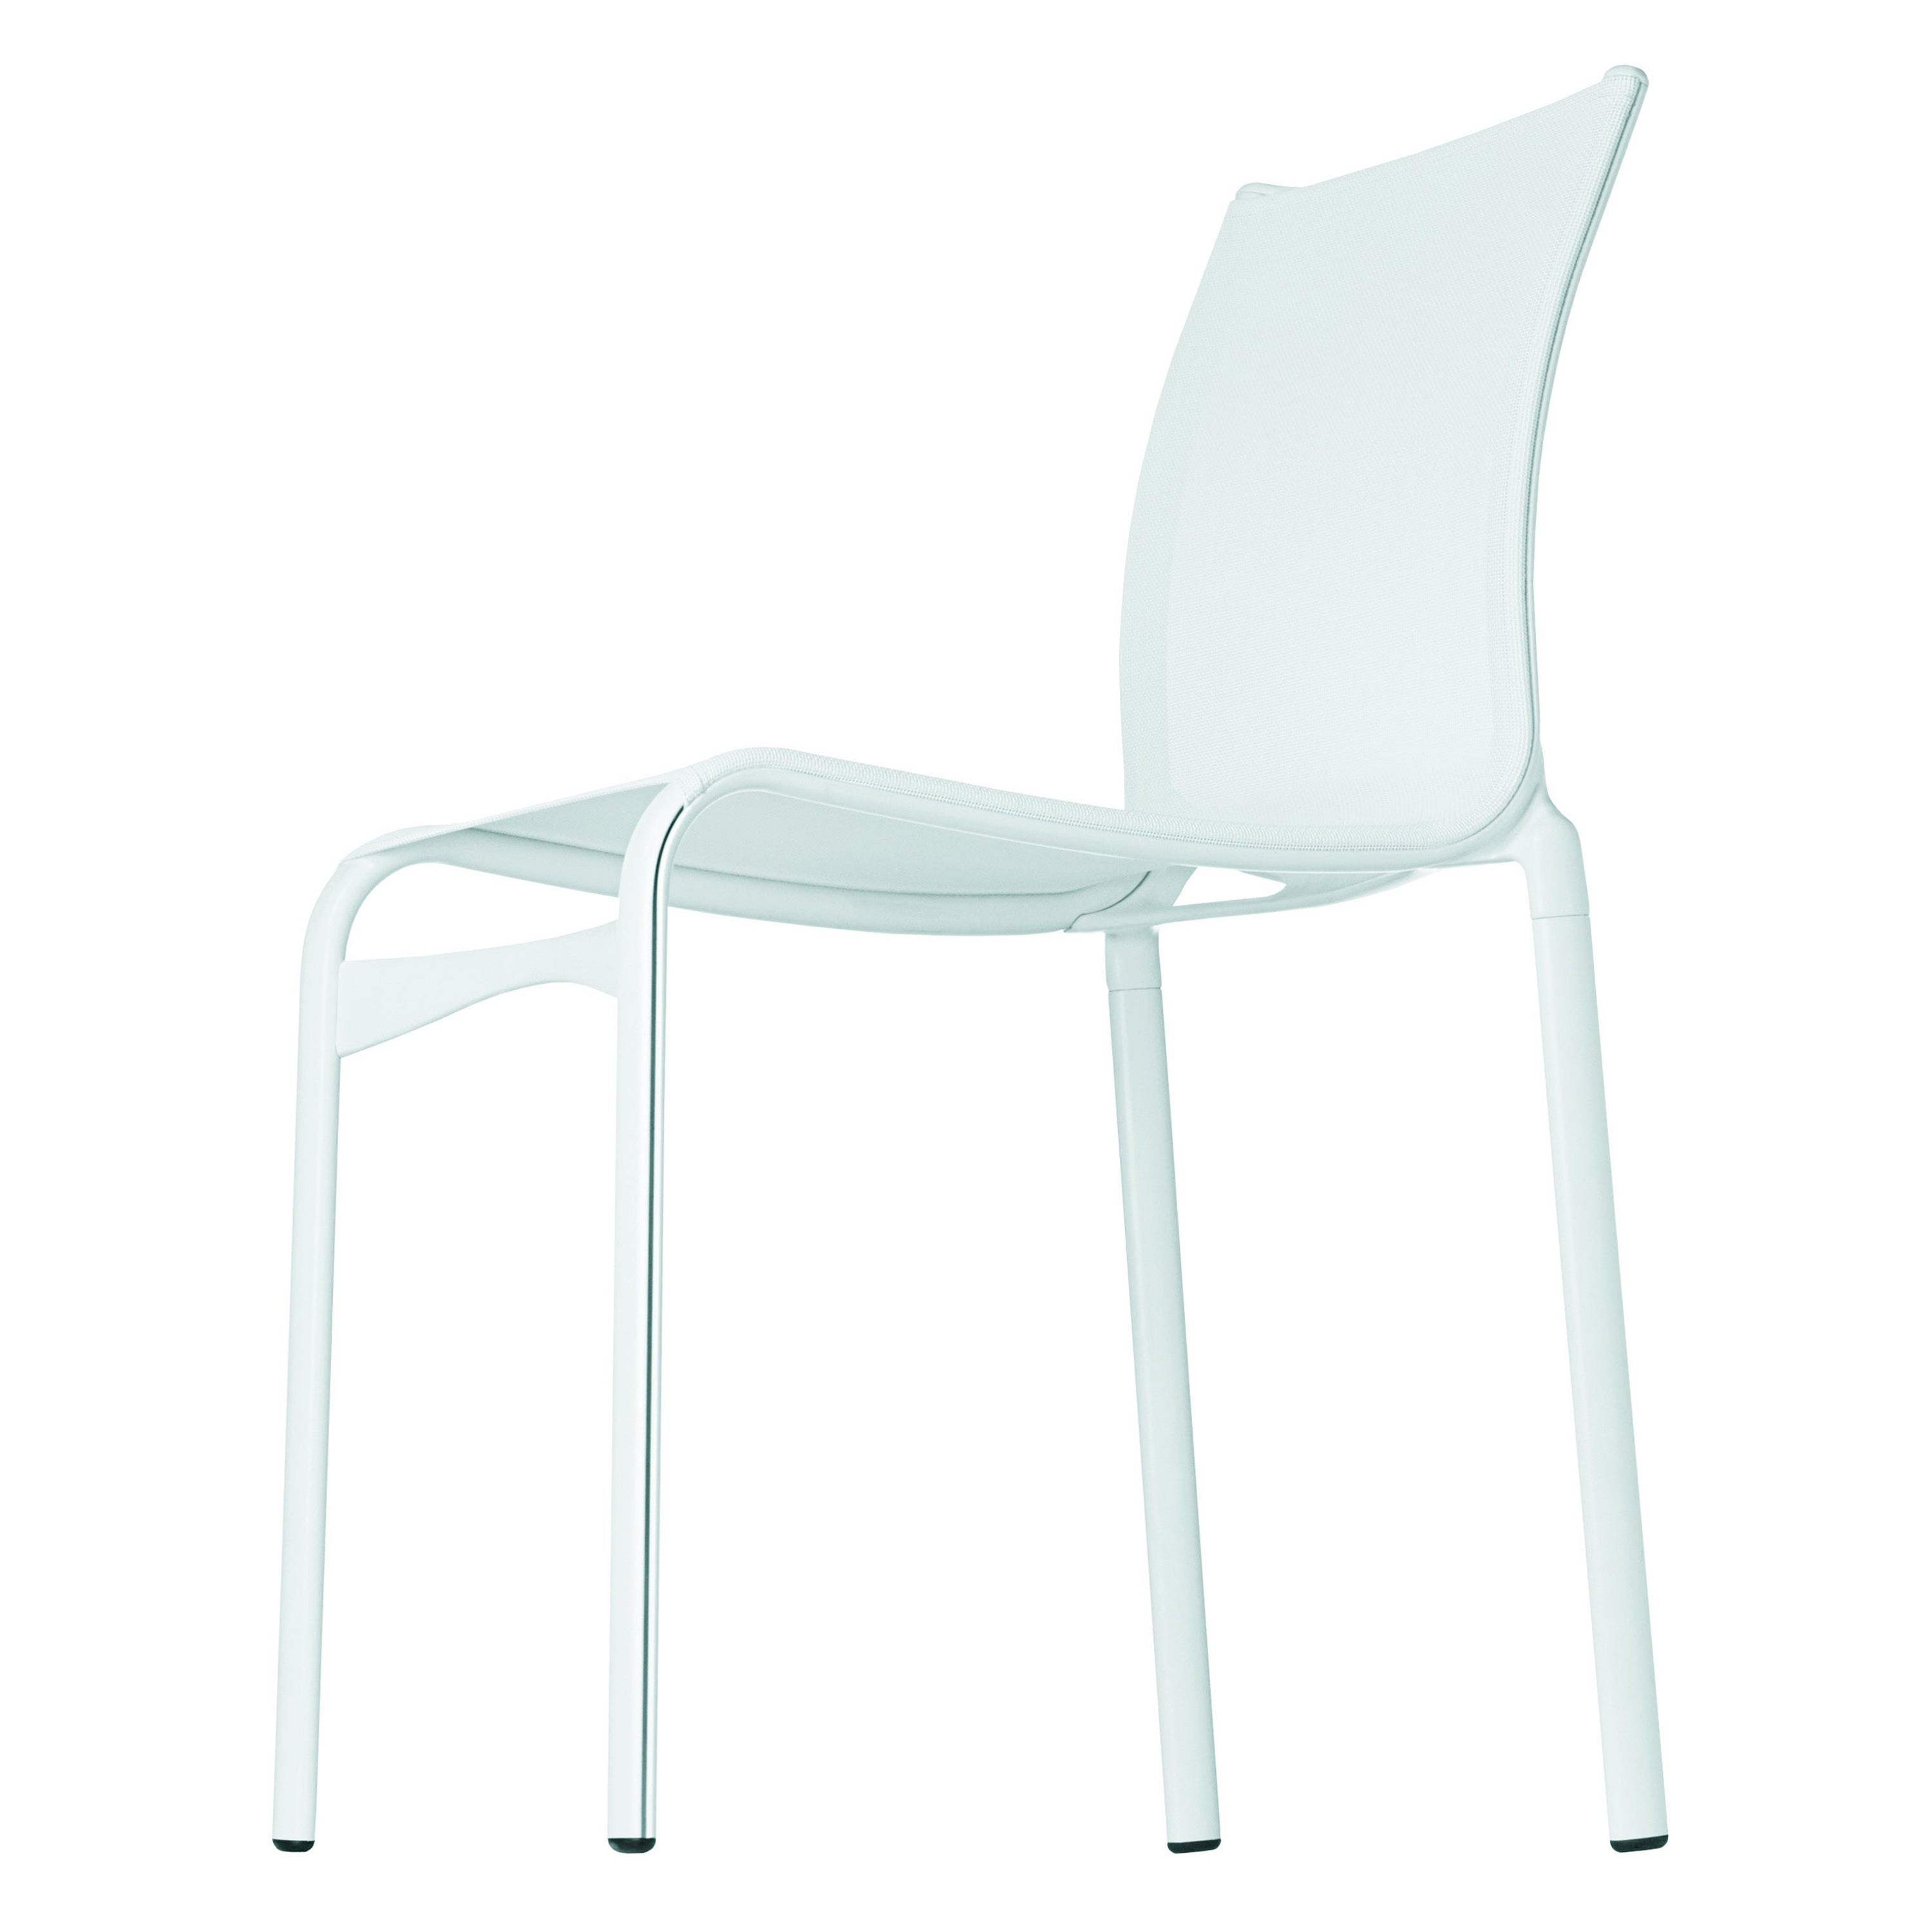 Alias Highframe 40 Outdoor-Stuhl aus weißem Mesh mit lackiertem Aluminiumrahmen